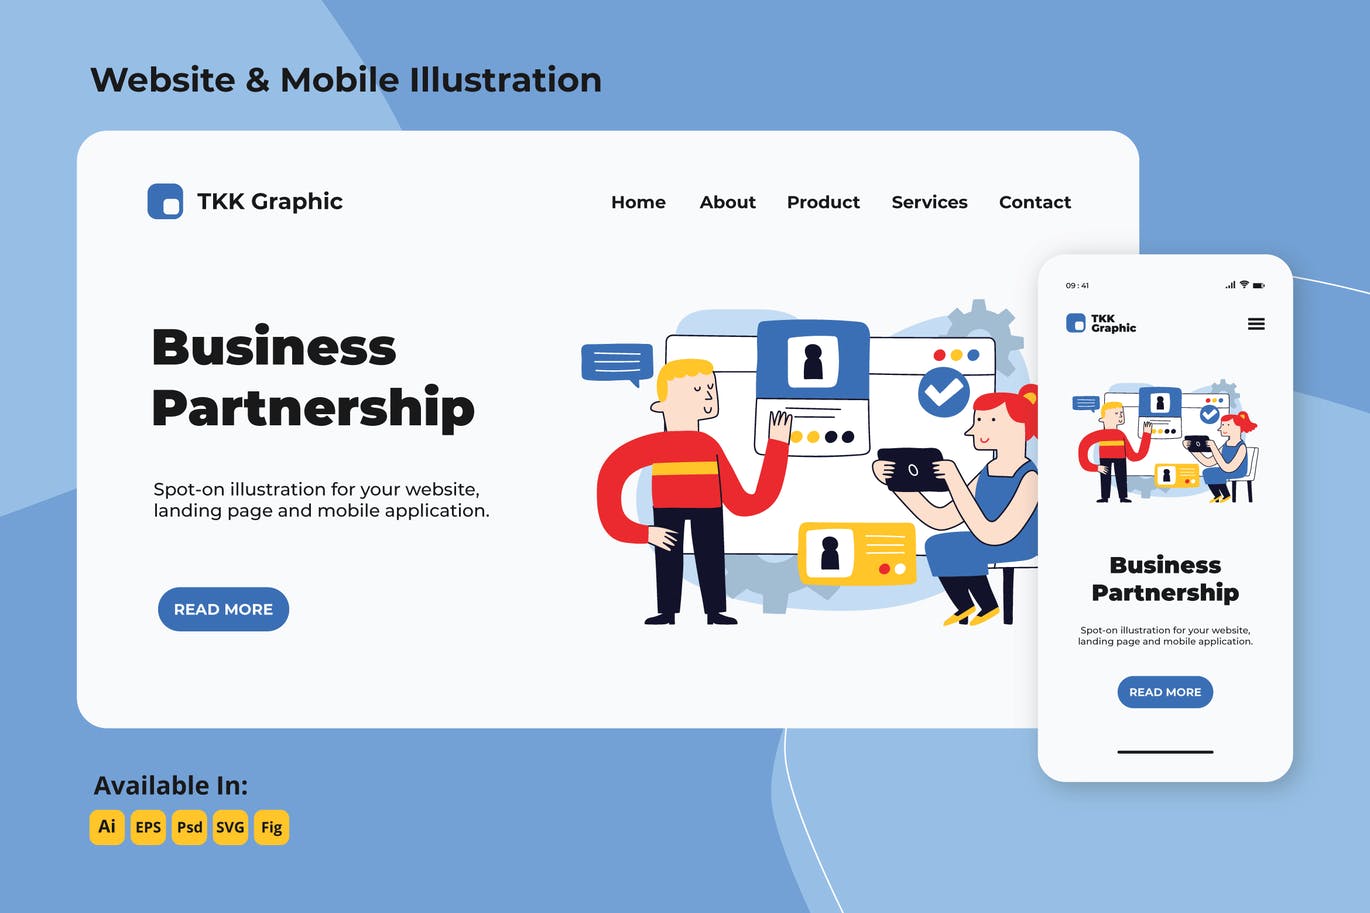 Business Partnership landing page